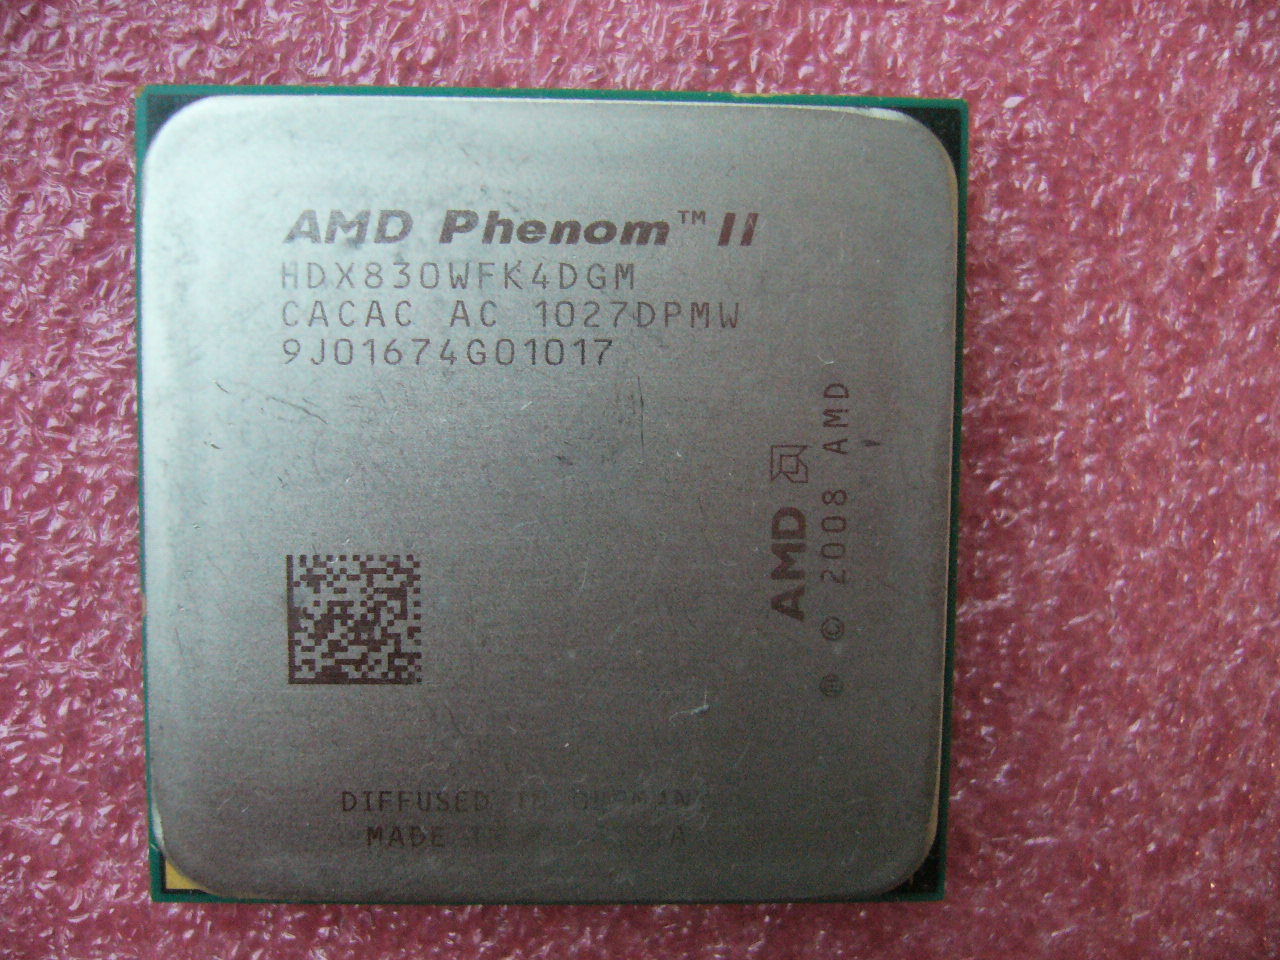 QTY 1x AMD Phenom II X4 830 2.8 GHz Quad-Core (HDX830WFK4DGM) CPU AM3 938-Pin - Click Image to Close